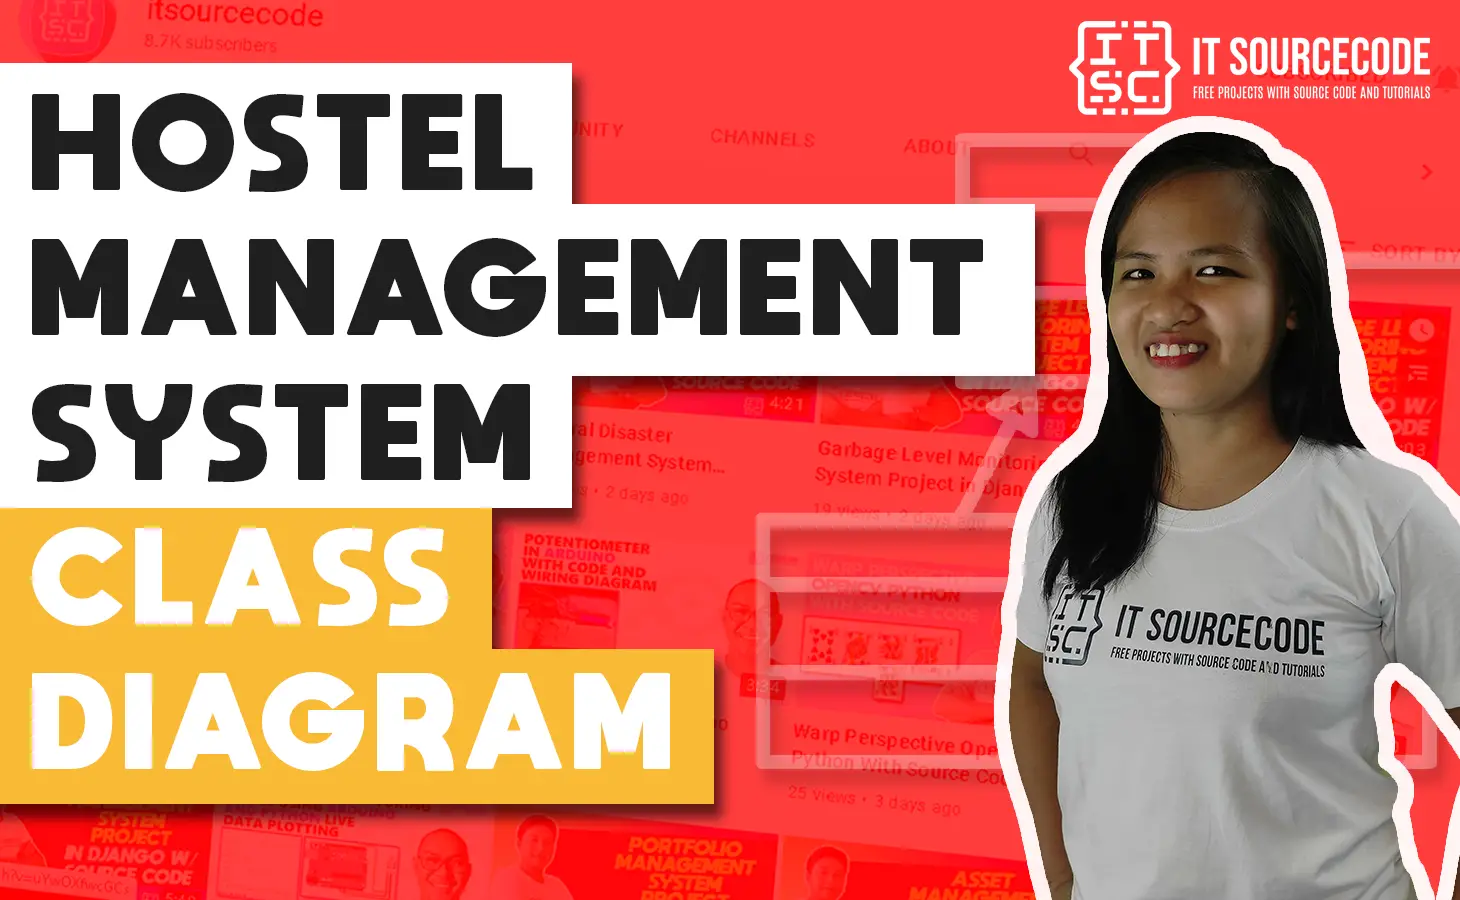 Hostel Management System Class Diagram